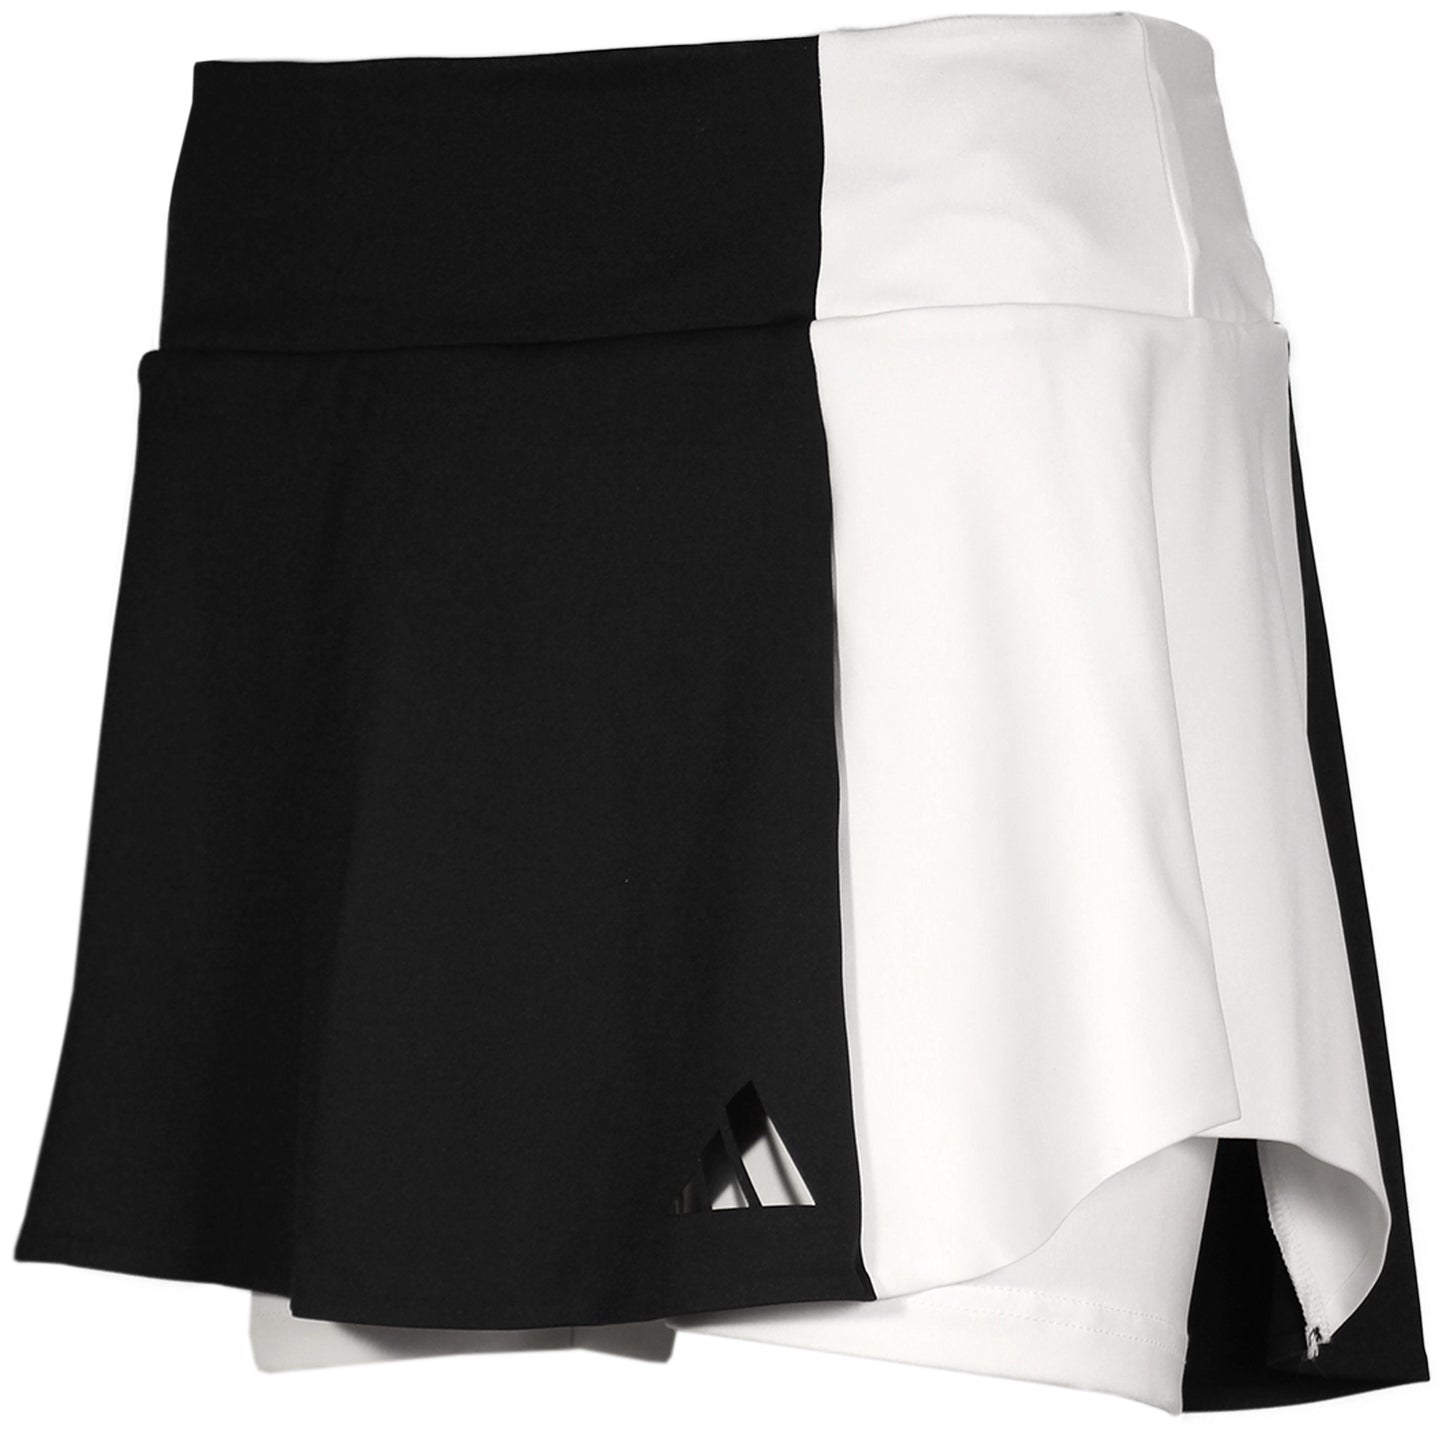 Adidas Women's Premium Skirt IL7375